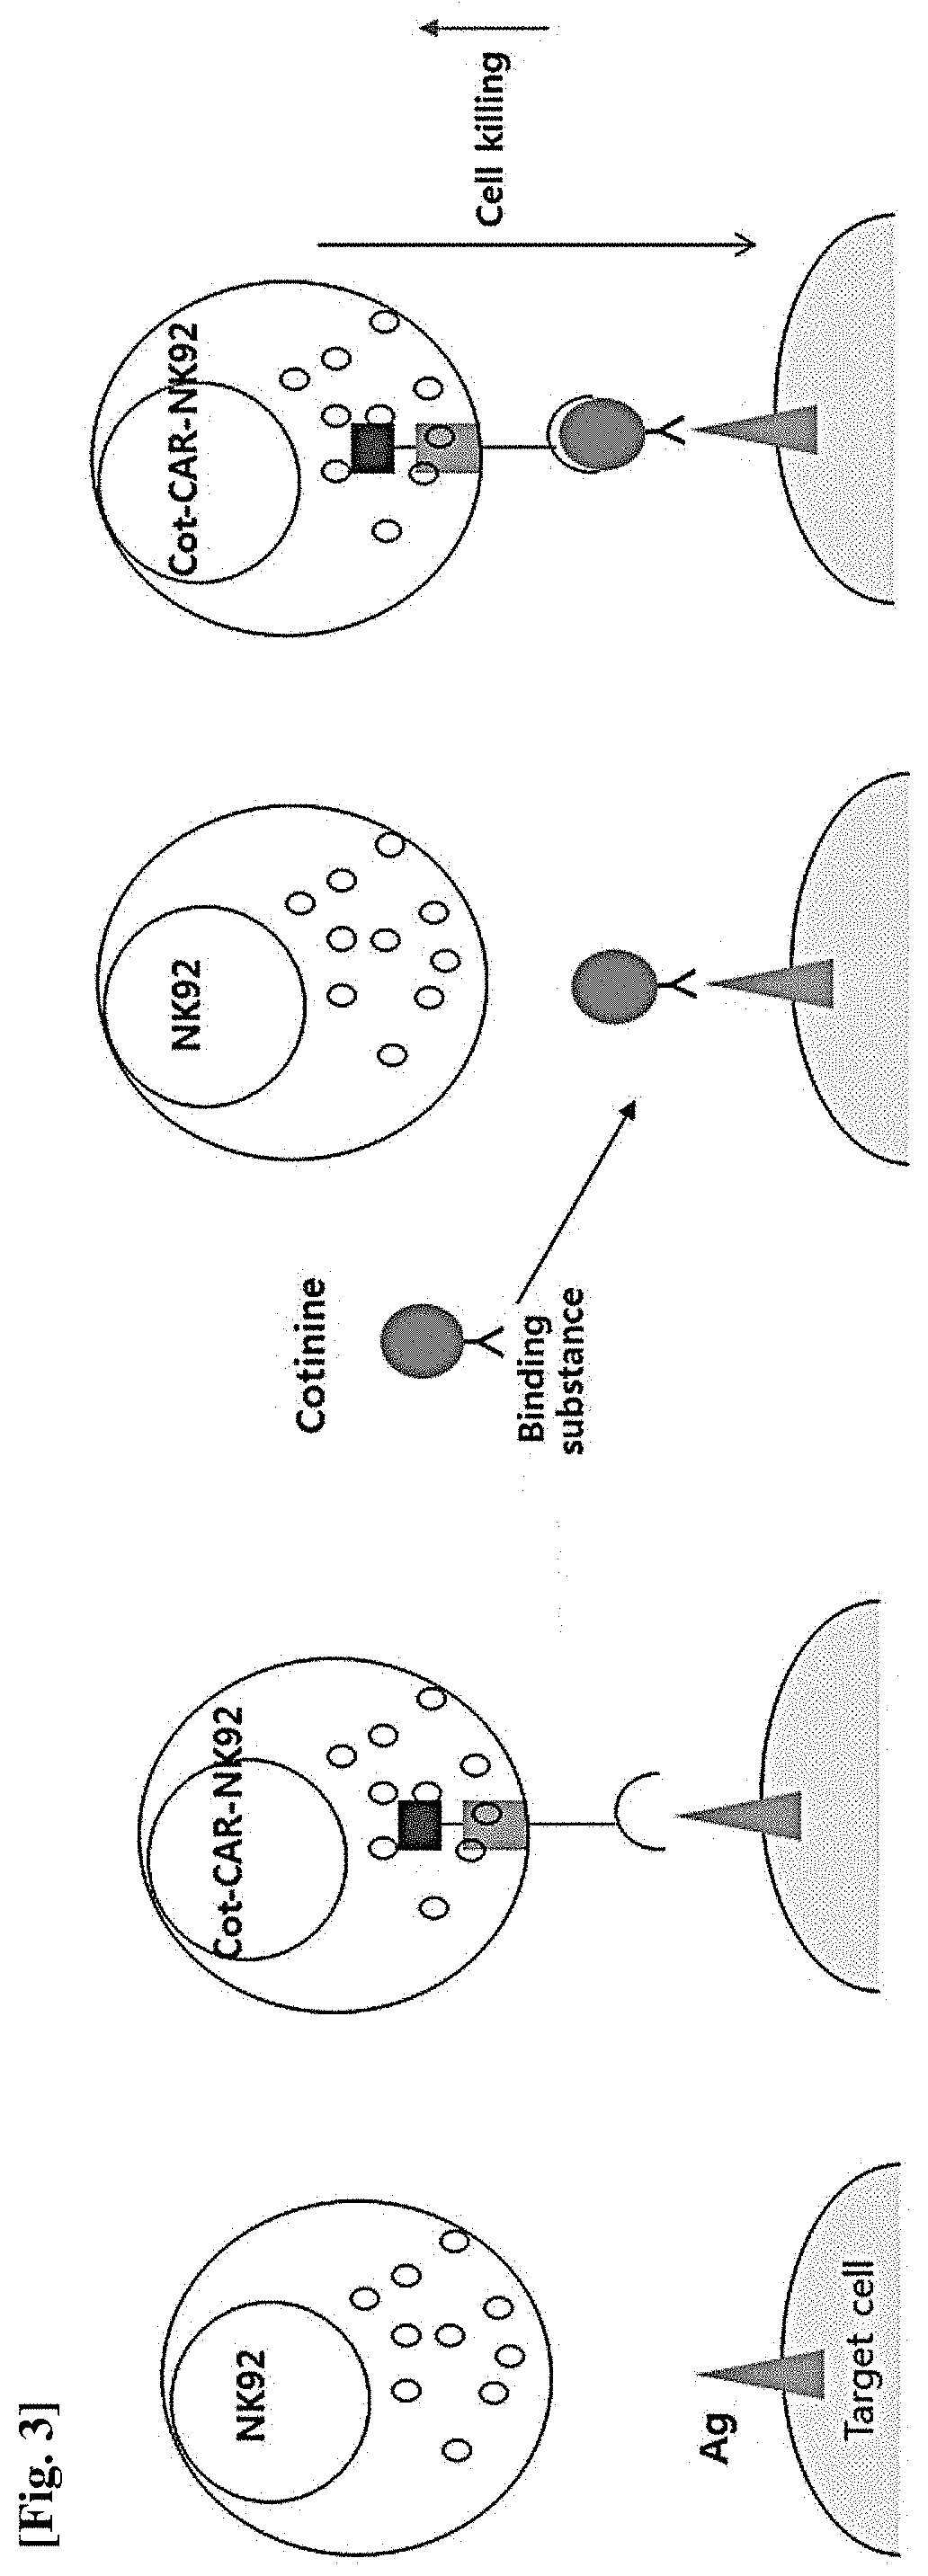 Natural killer cell expressing Anti-cotinine chimeric antigen receptor